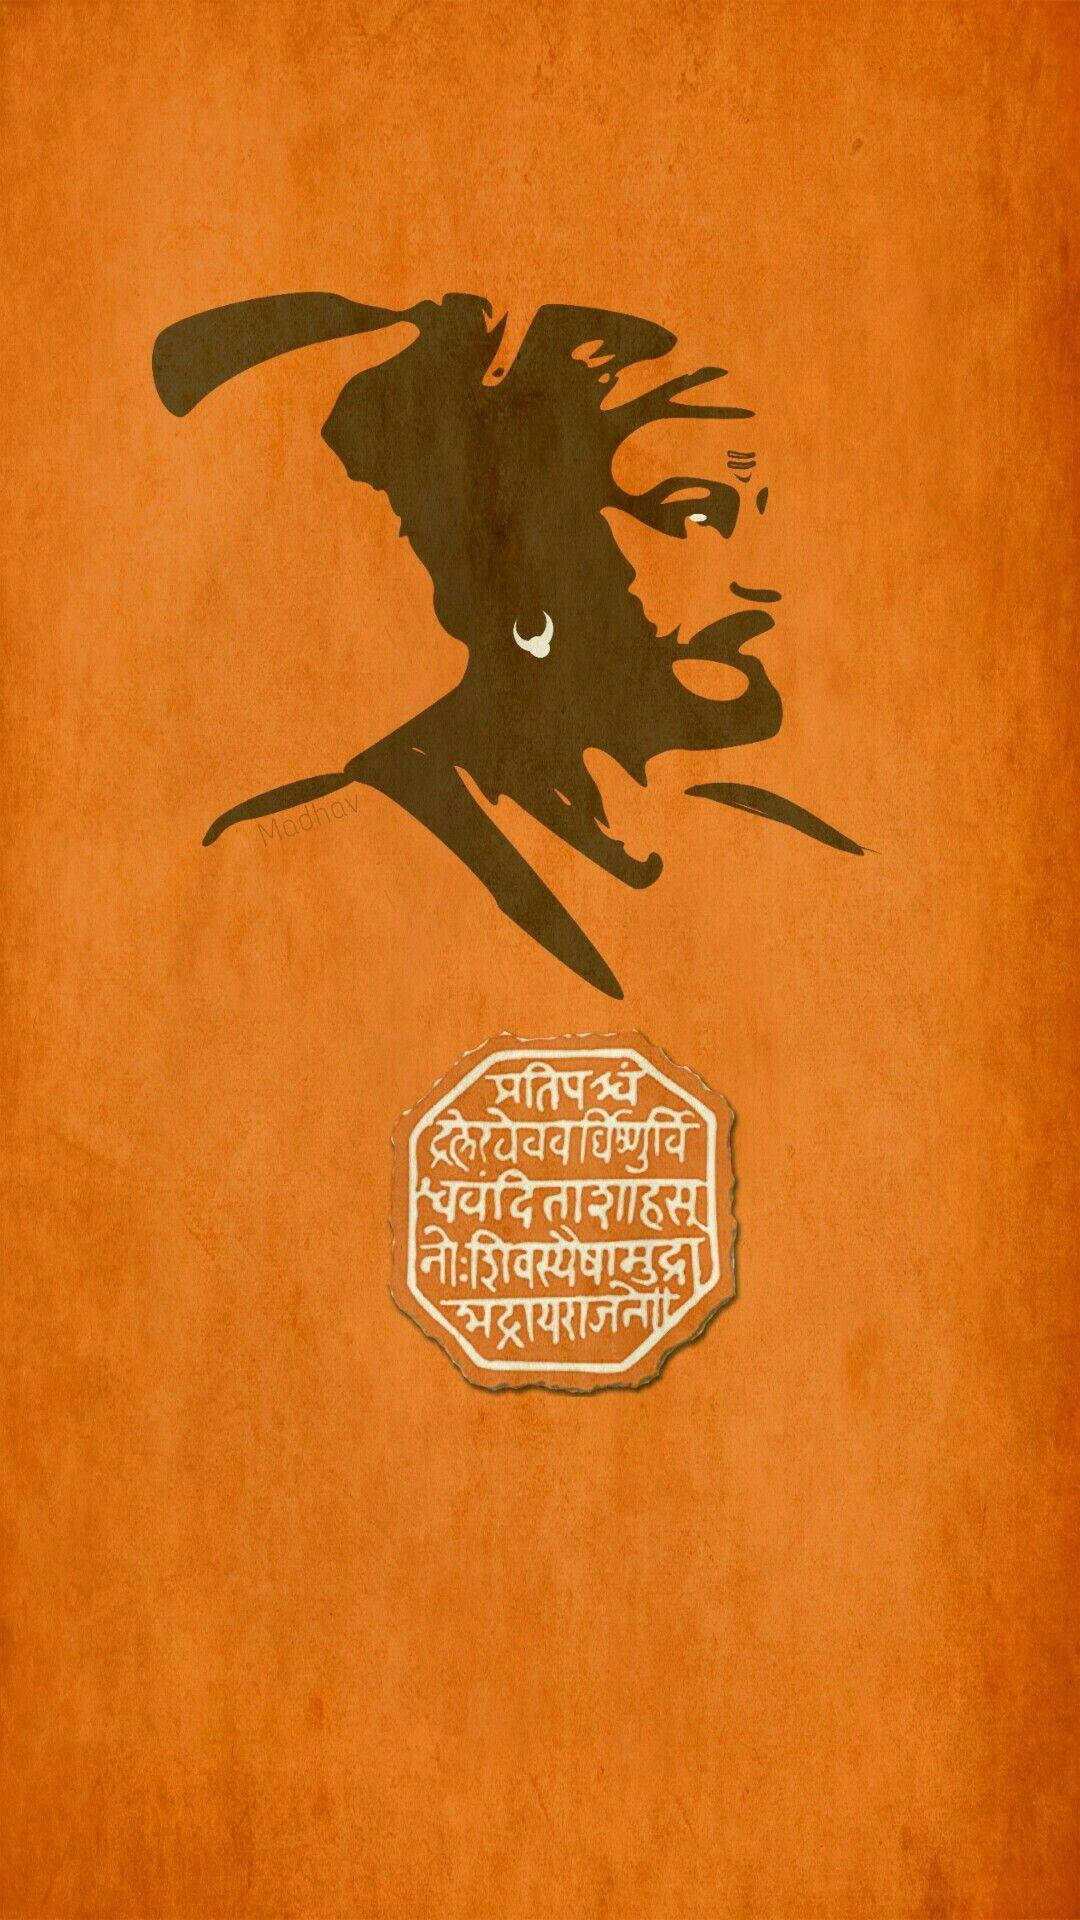 Shivaji Maharaj Paint Art On Orange Wall Hd Wallpaper